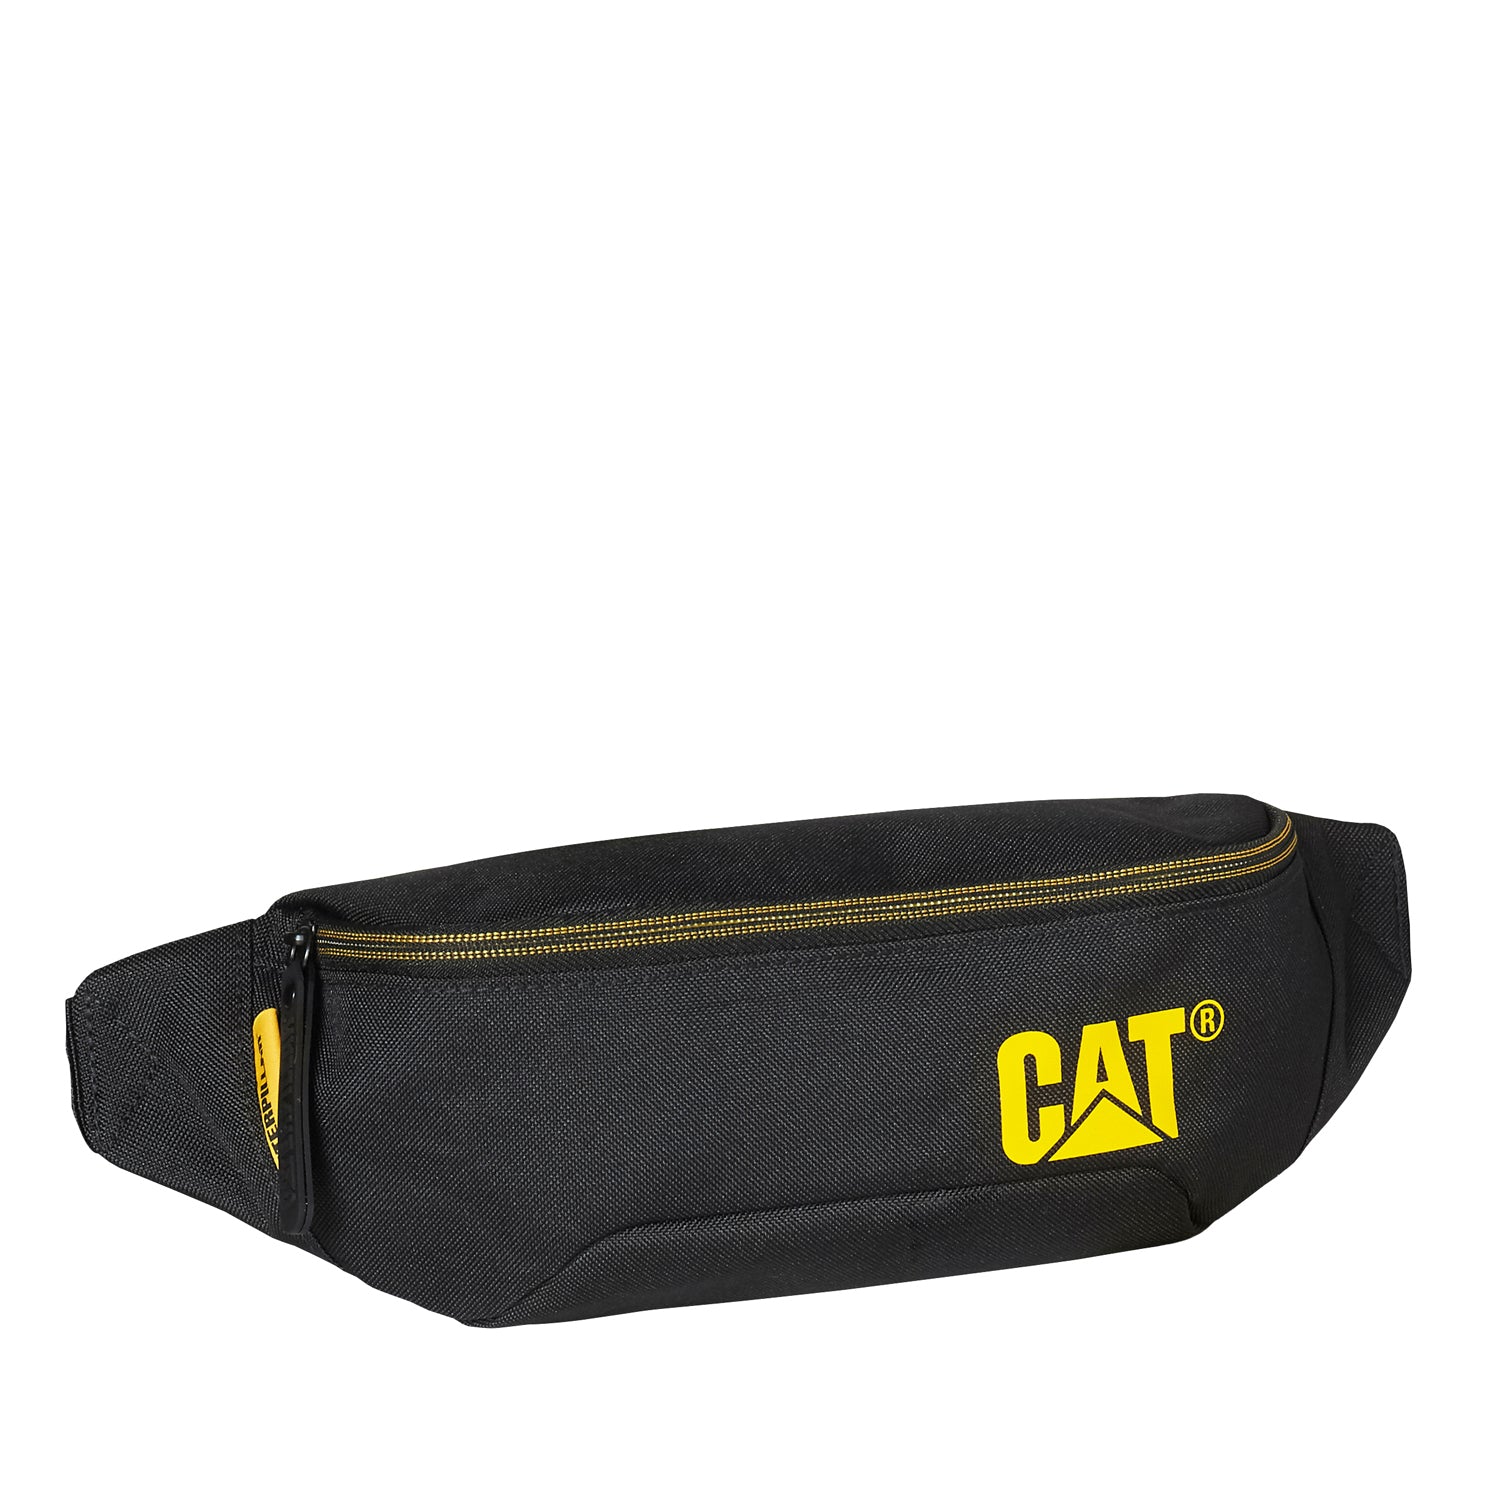 CAT - 83615-01 PROJECT waist bag - Black